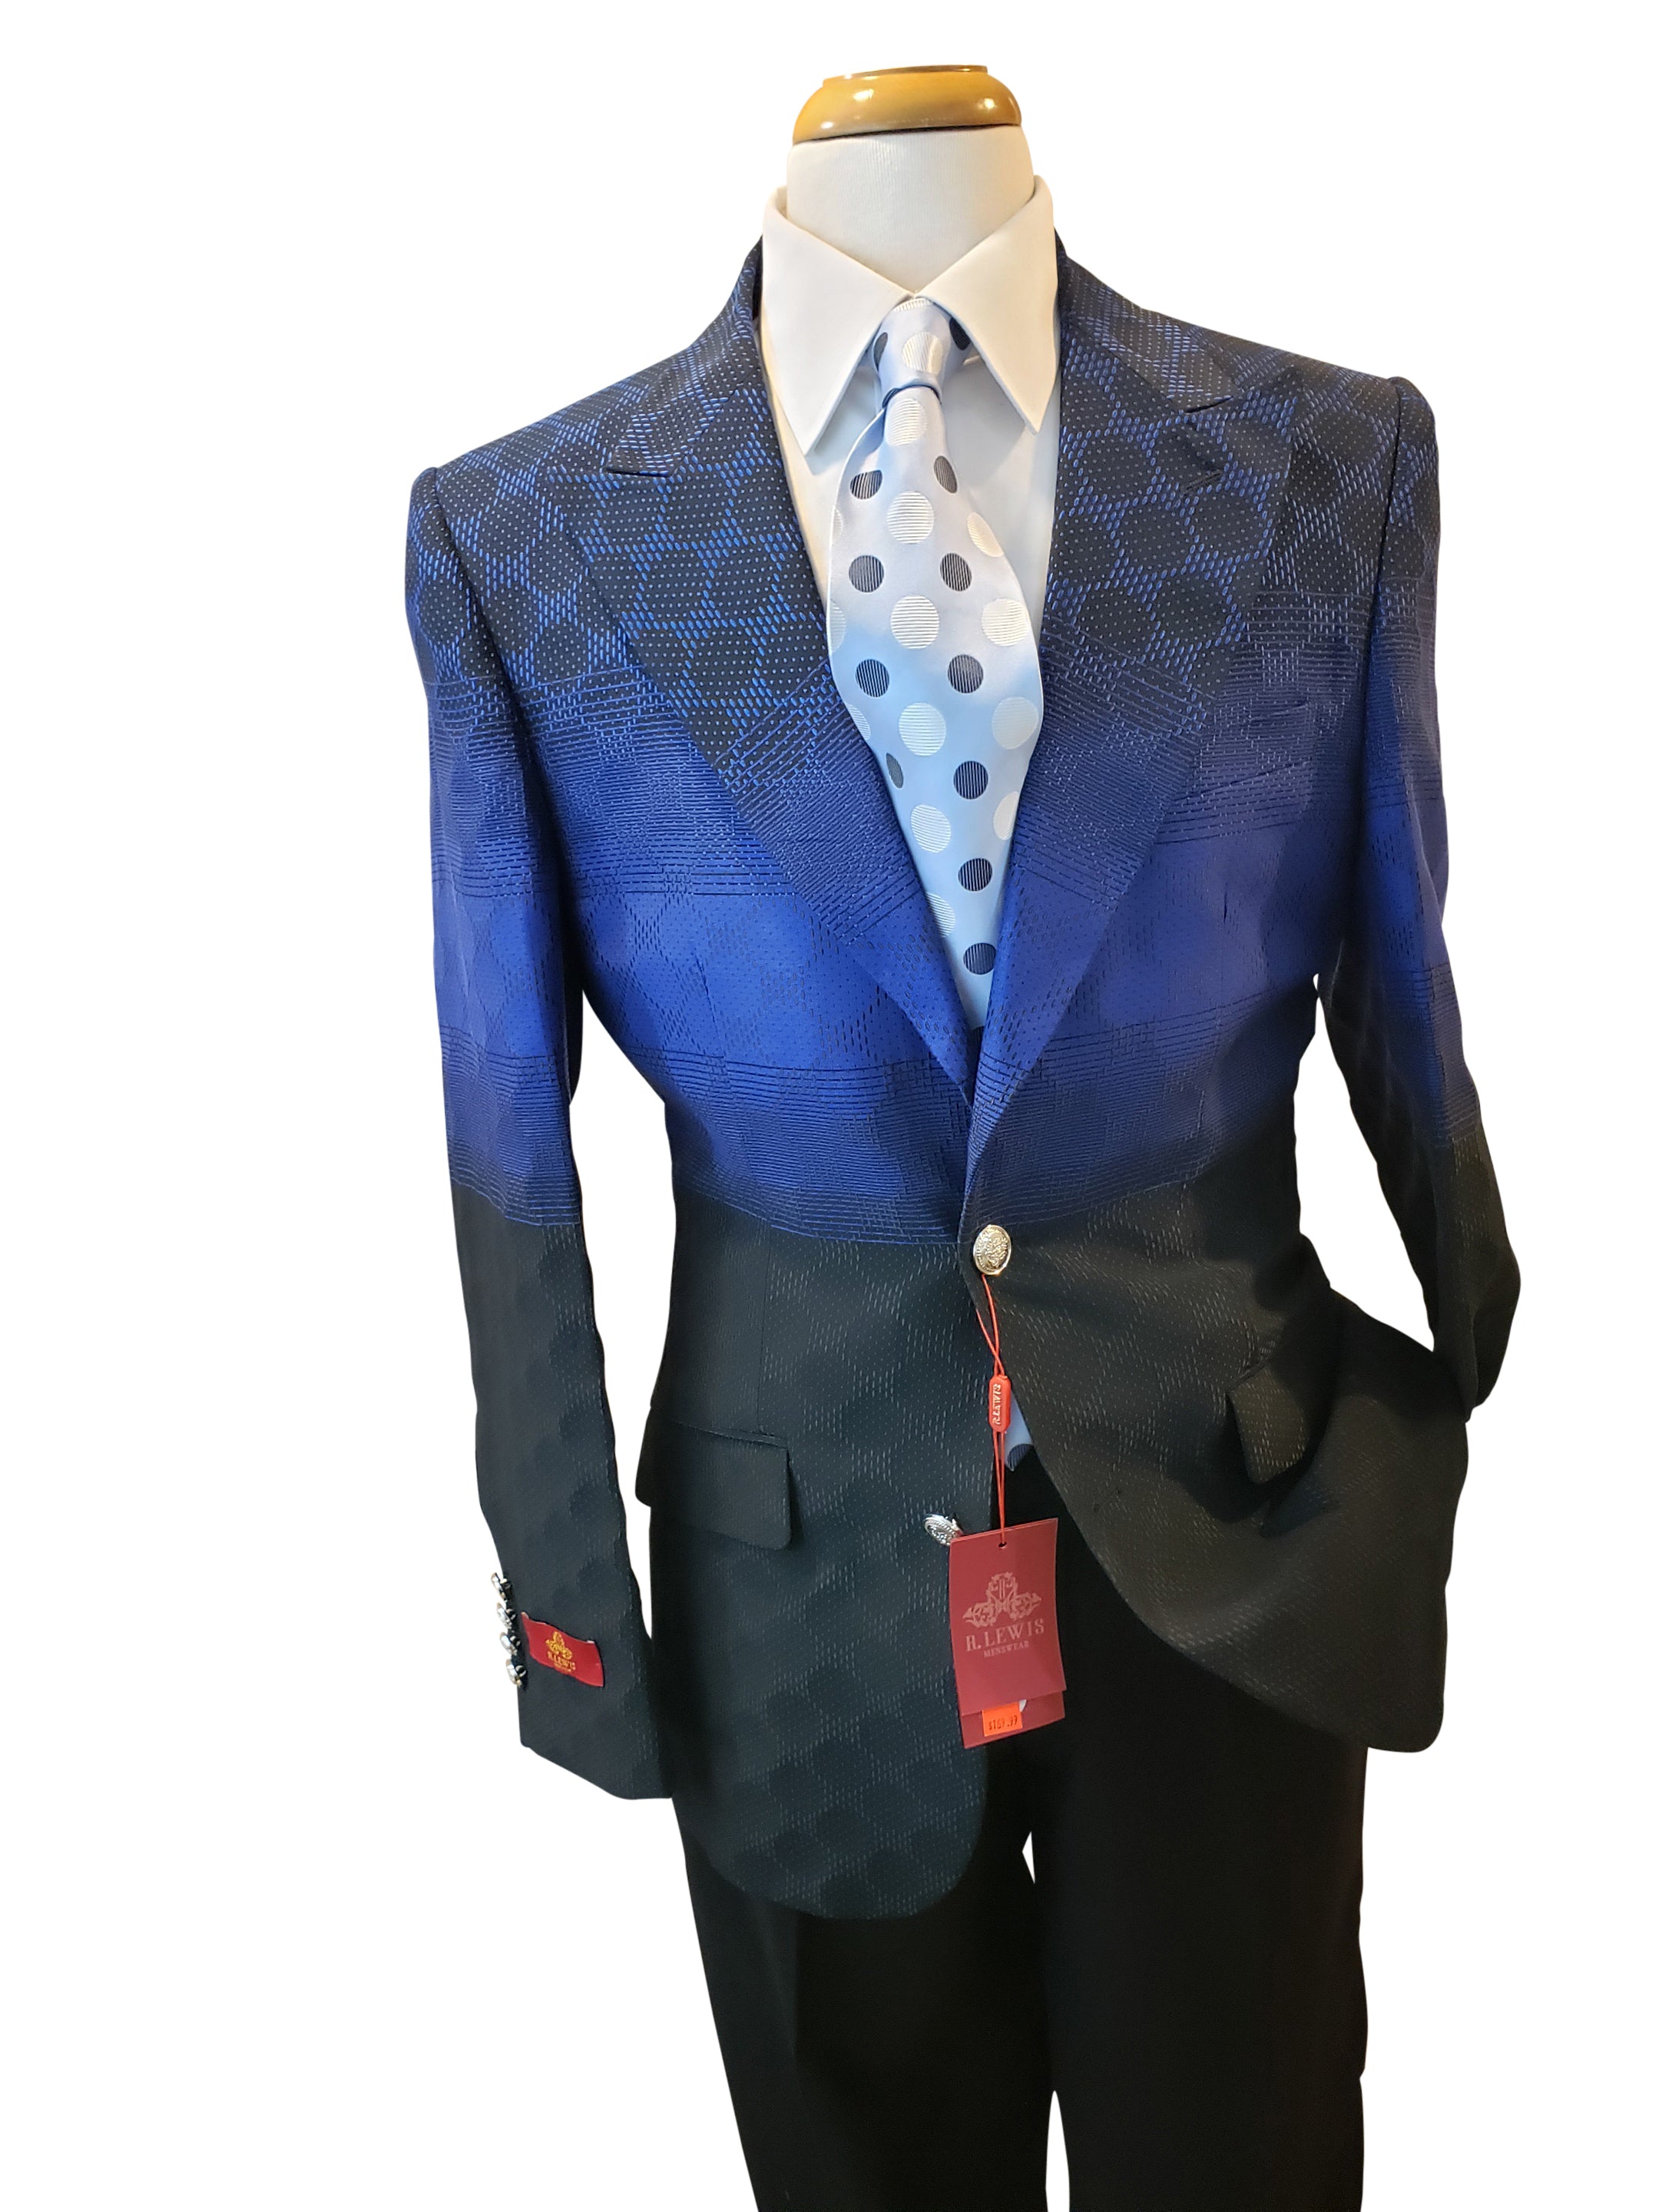 Robert Lewis Black&Royal suit